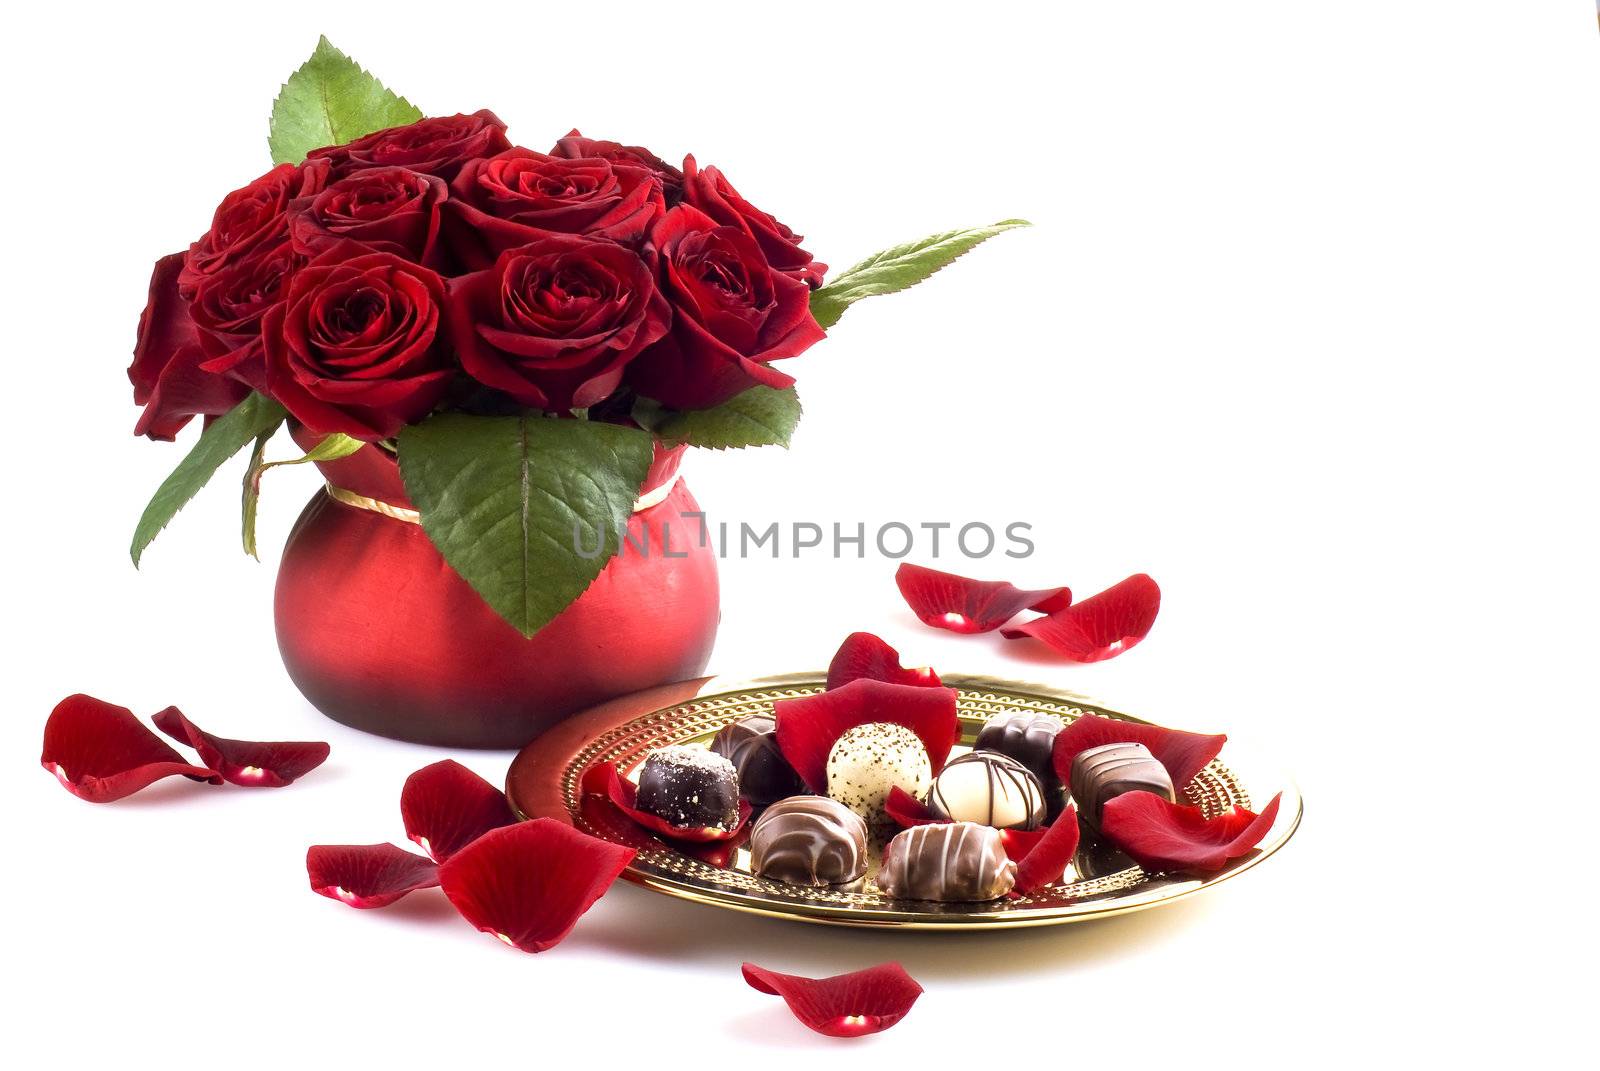 Chocolates and roses by caldix